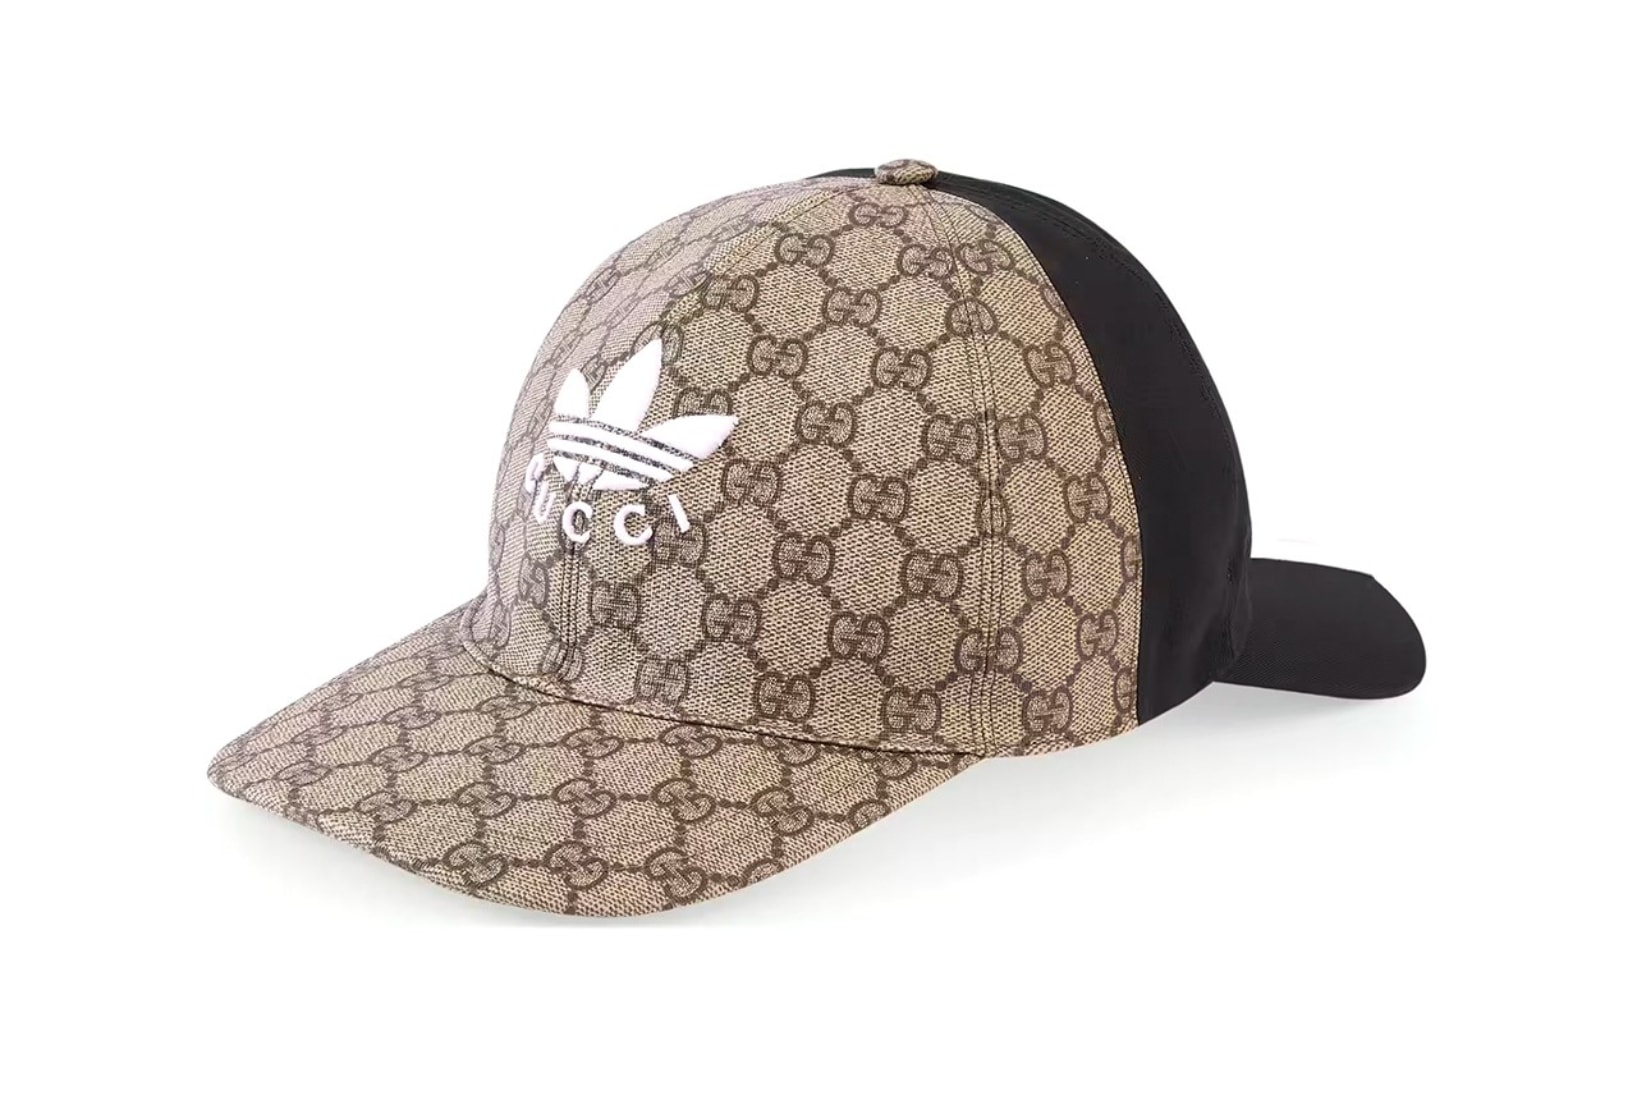 Gucci x adidas Drop Double-Sided Baseball Cap